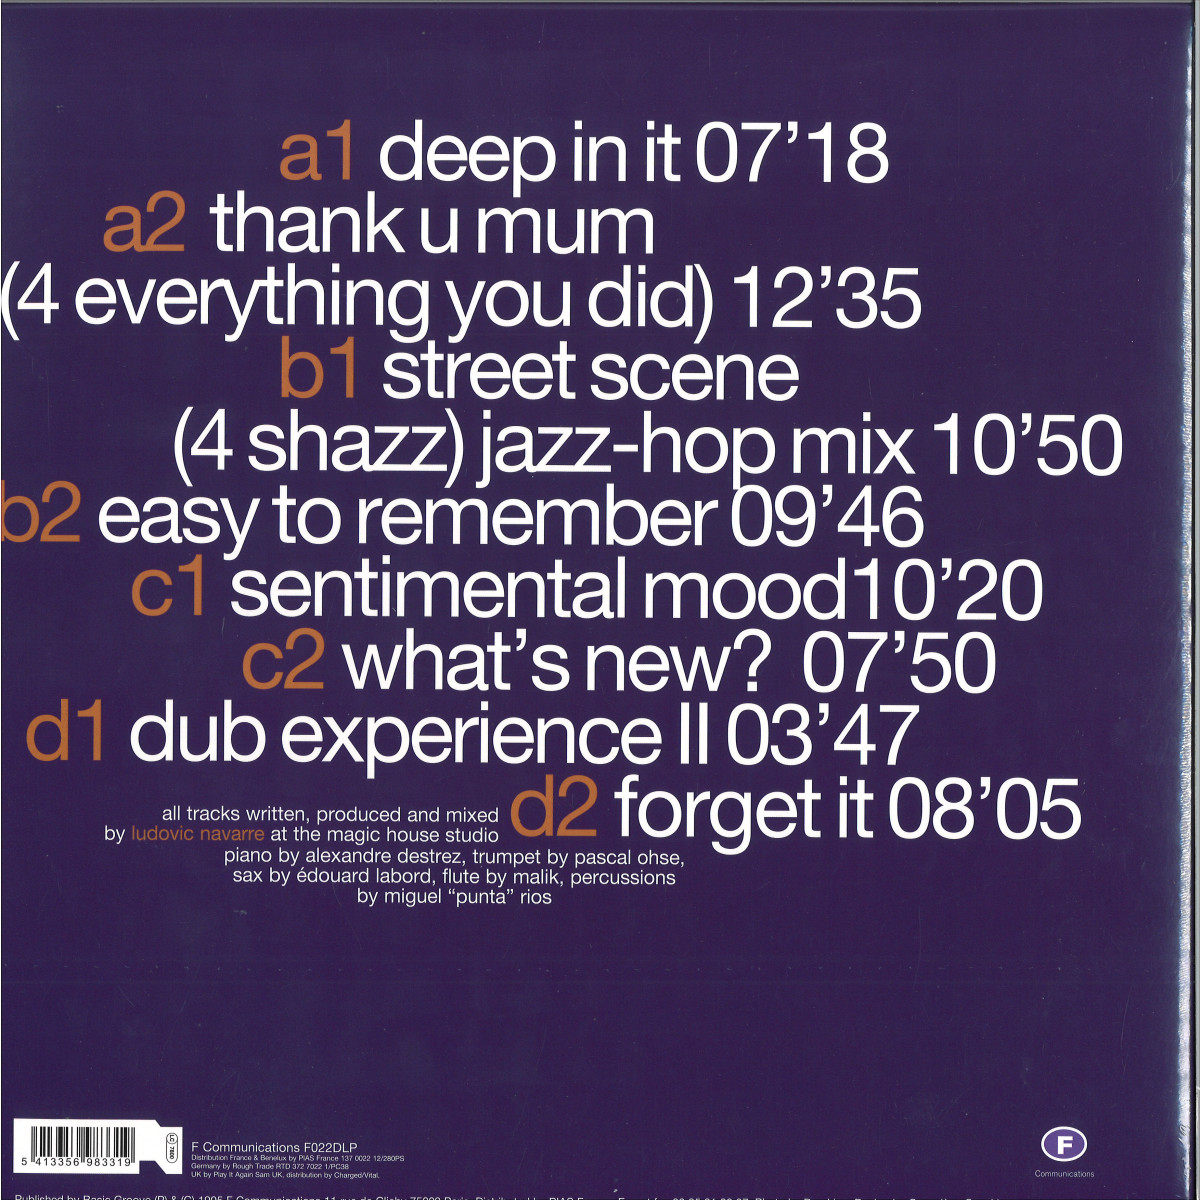 St Germain - BOULEVARD 2x12" / F Communications F022DLP - Vinyl